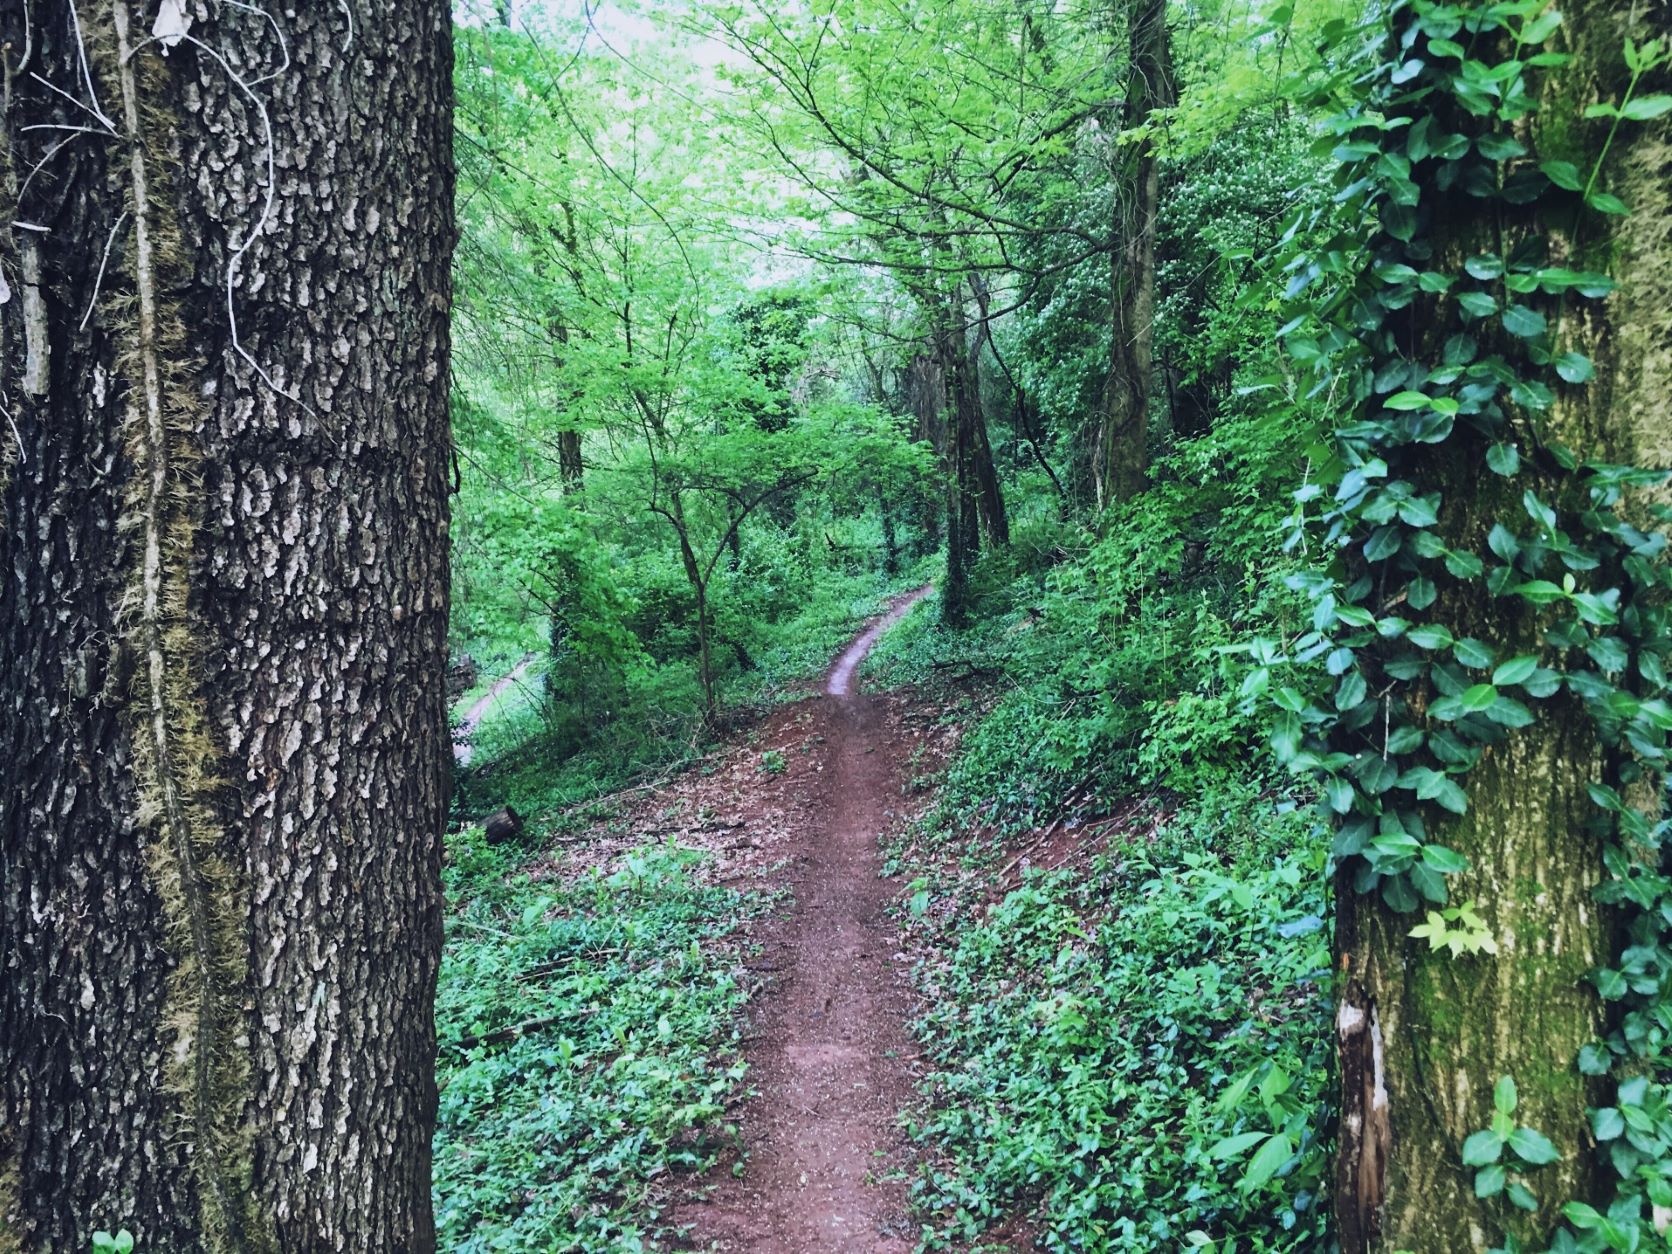 Greenery jungle path with poison ivy alongside.